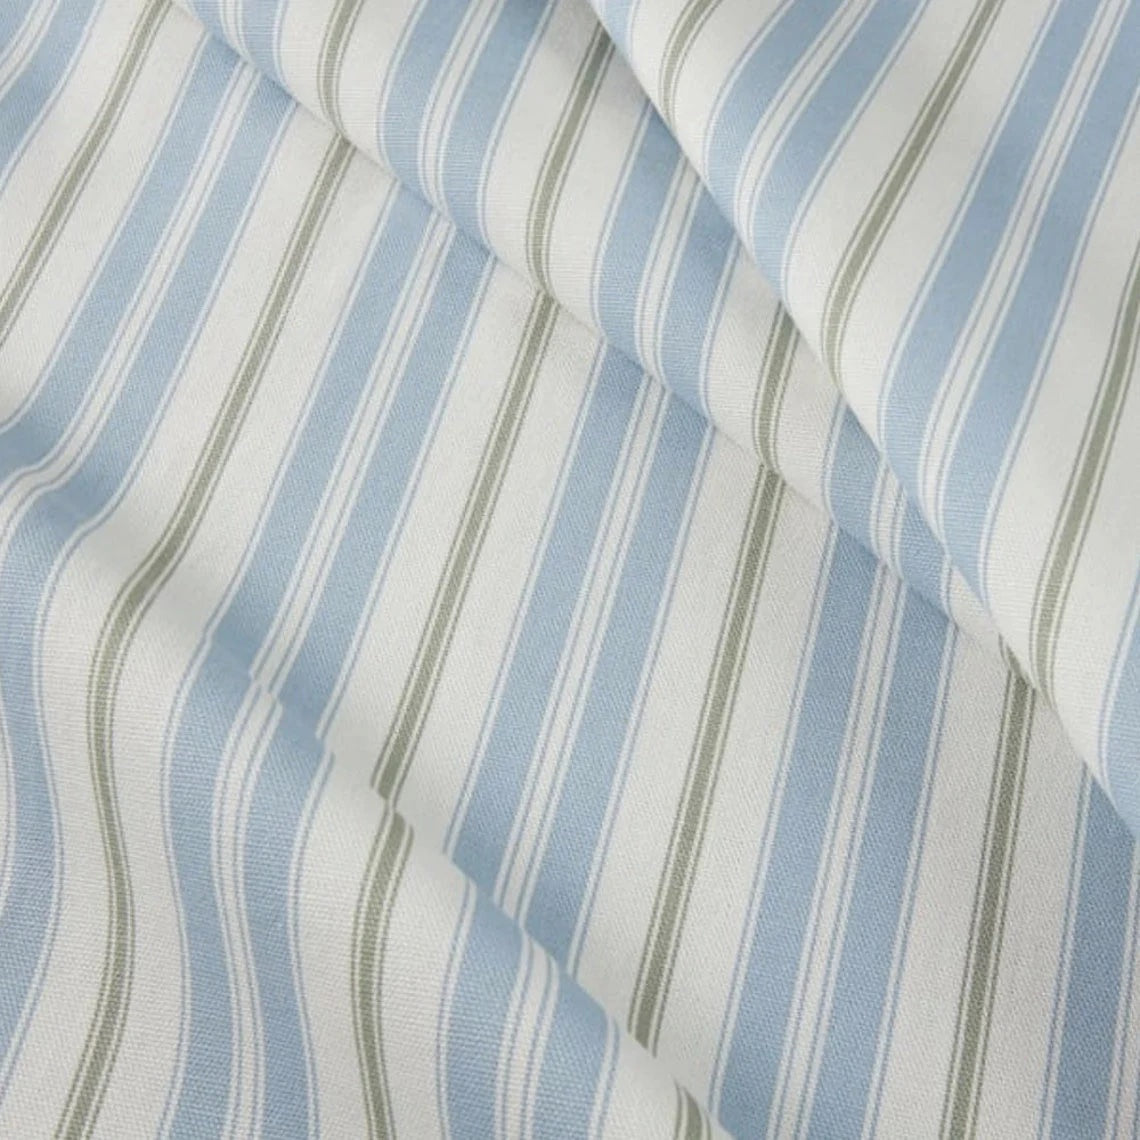 pinch pleated curtain panels pair in newbury antique blue stripe- blue, green, white